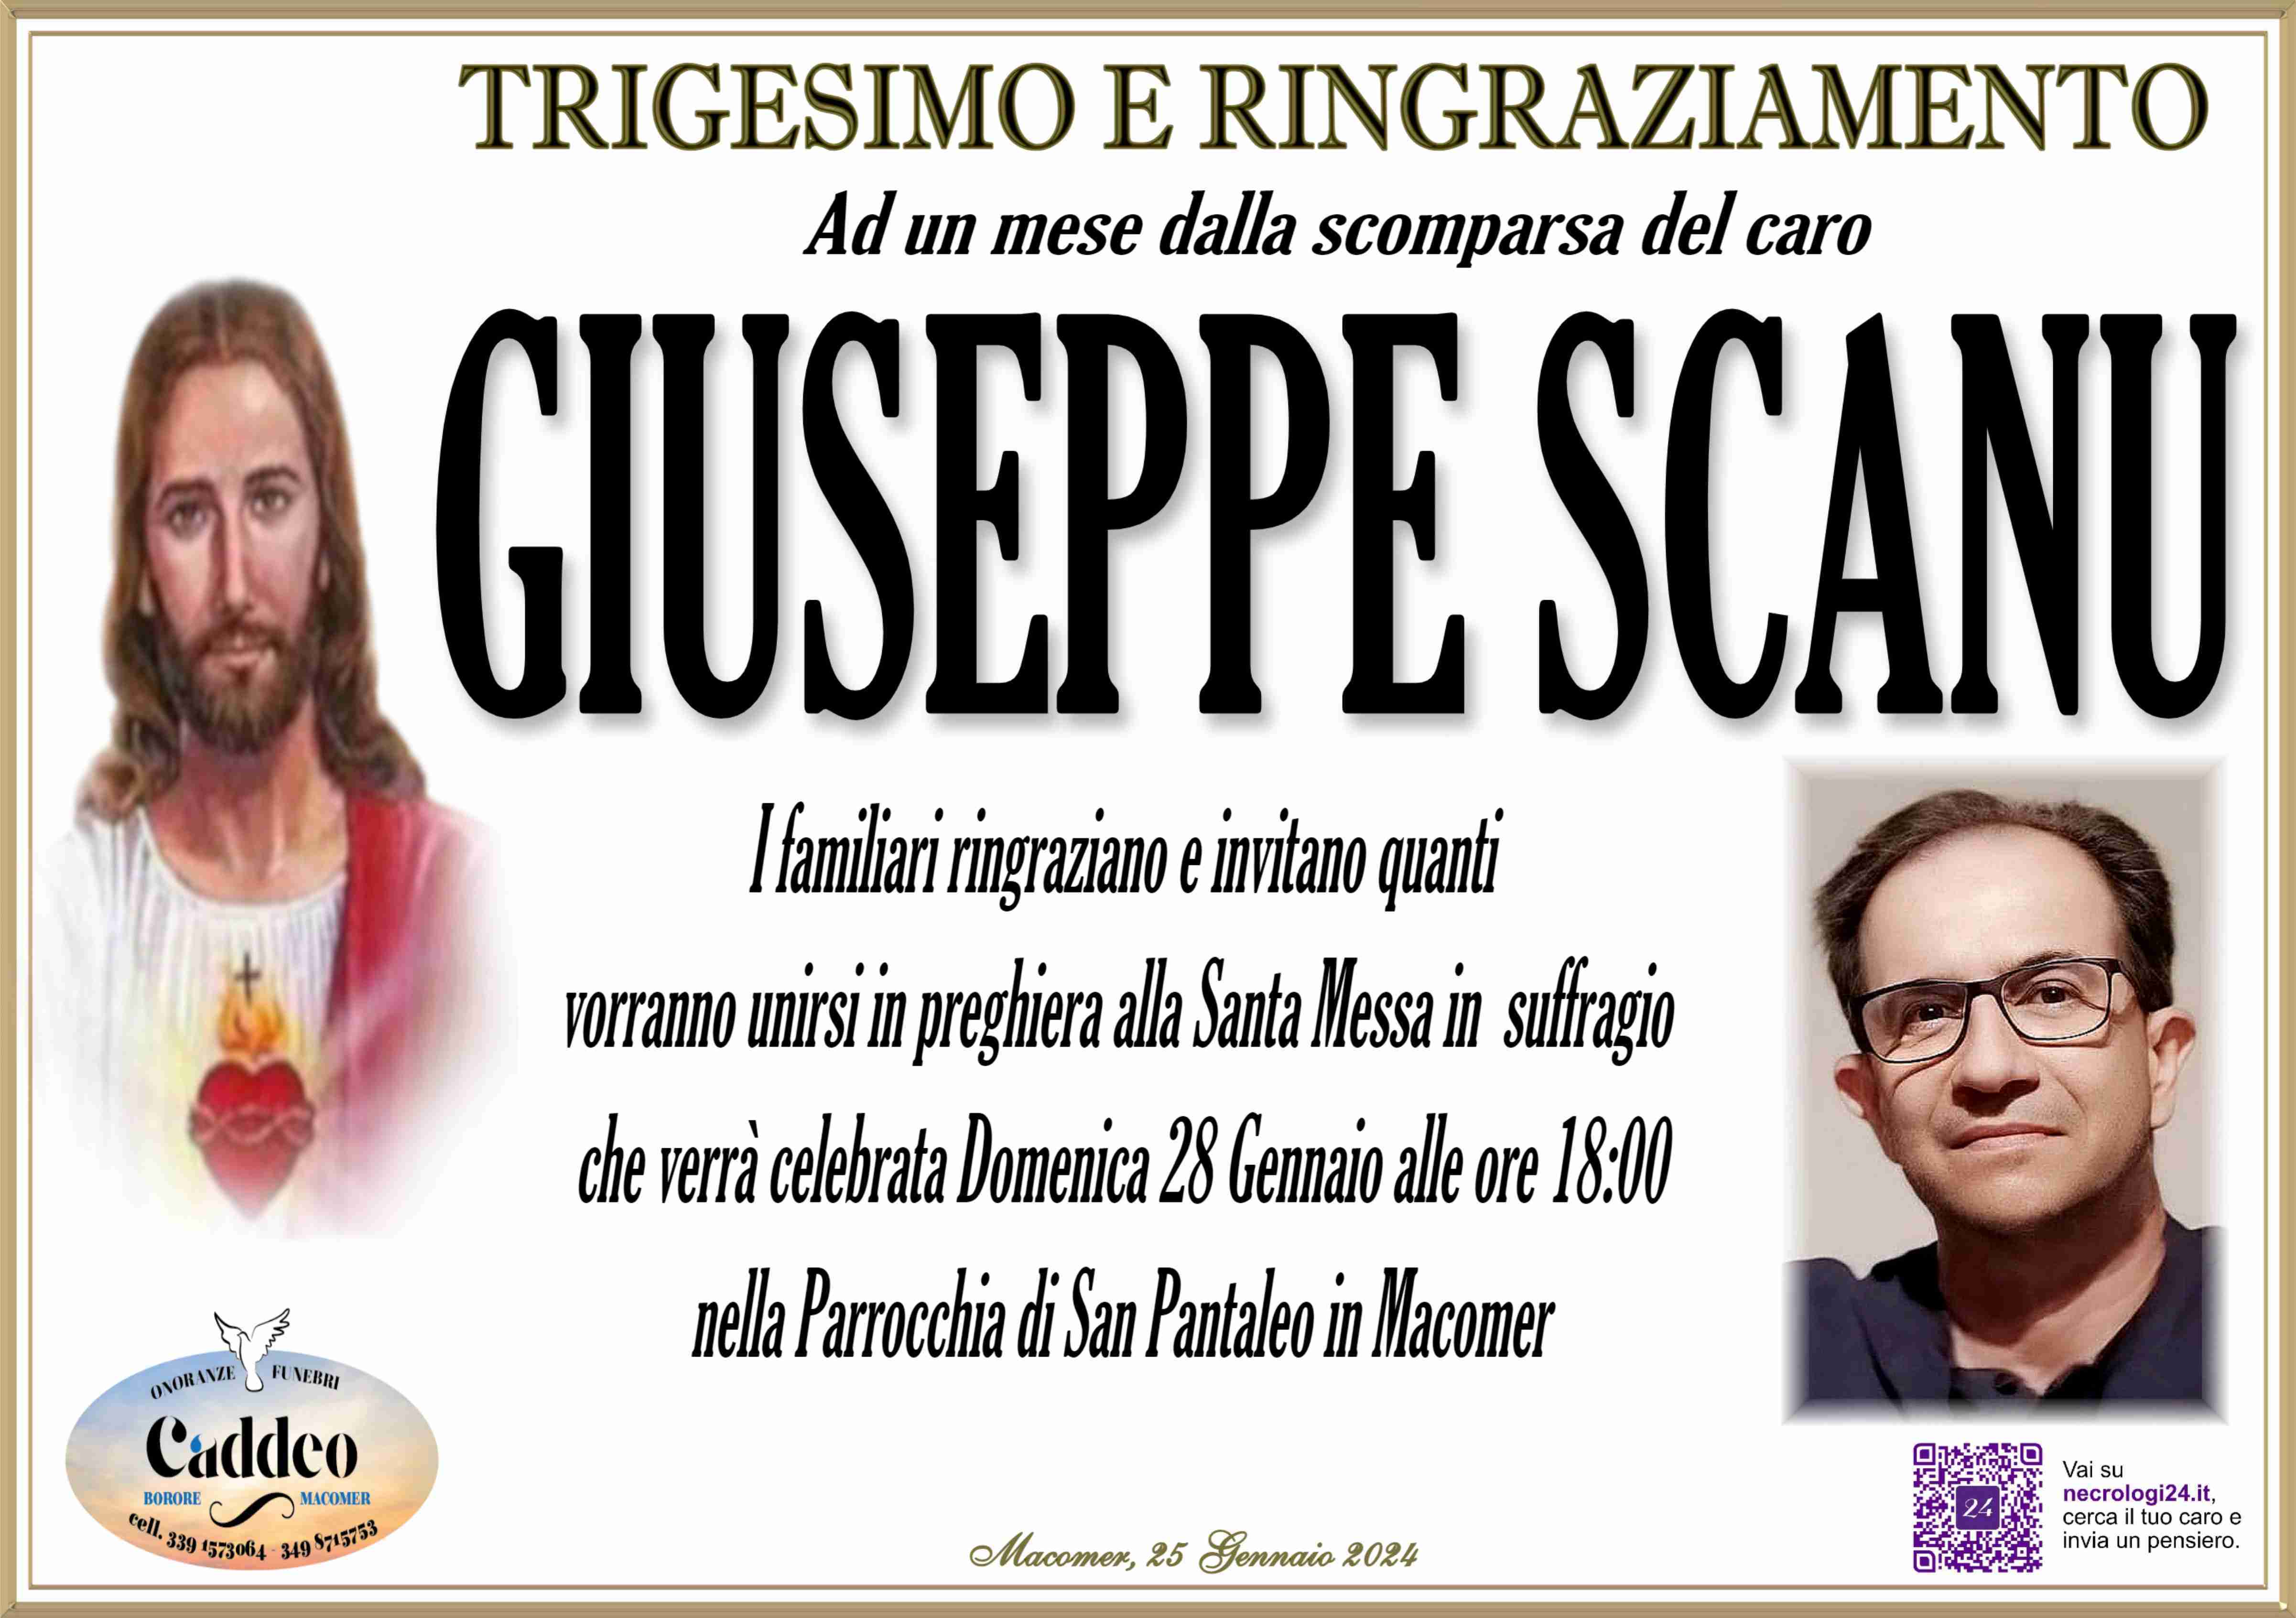 Giuseppe Scanu